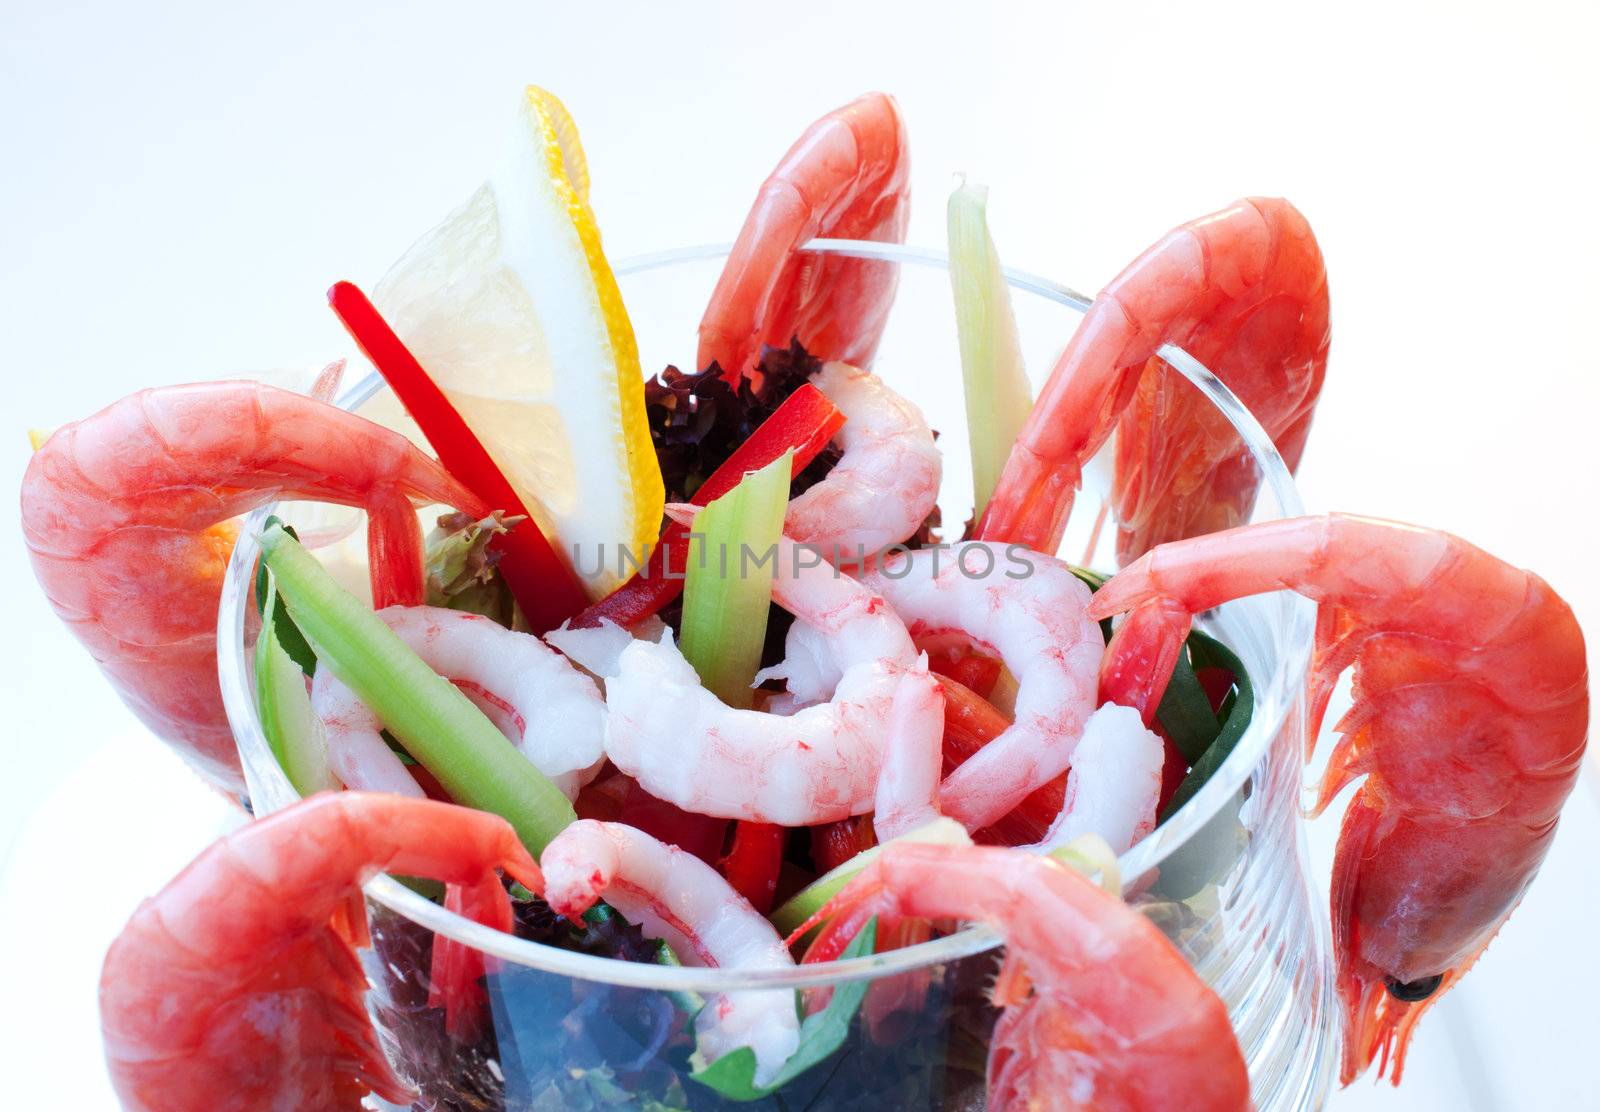 Shrimp cocktail in a salad bowl close up